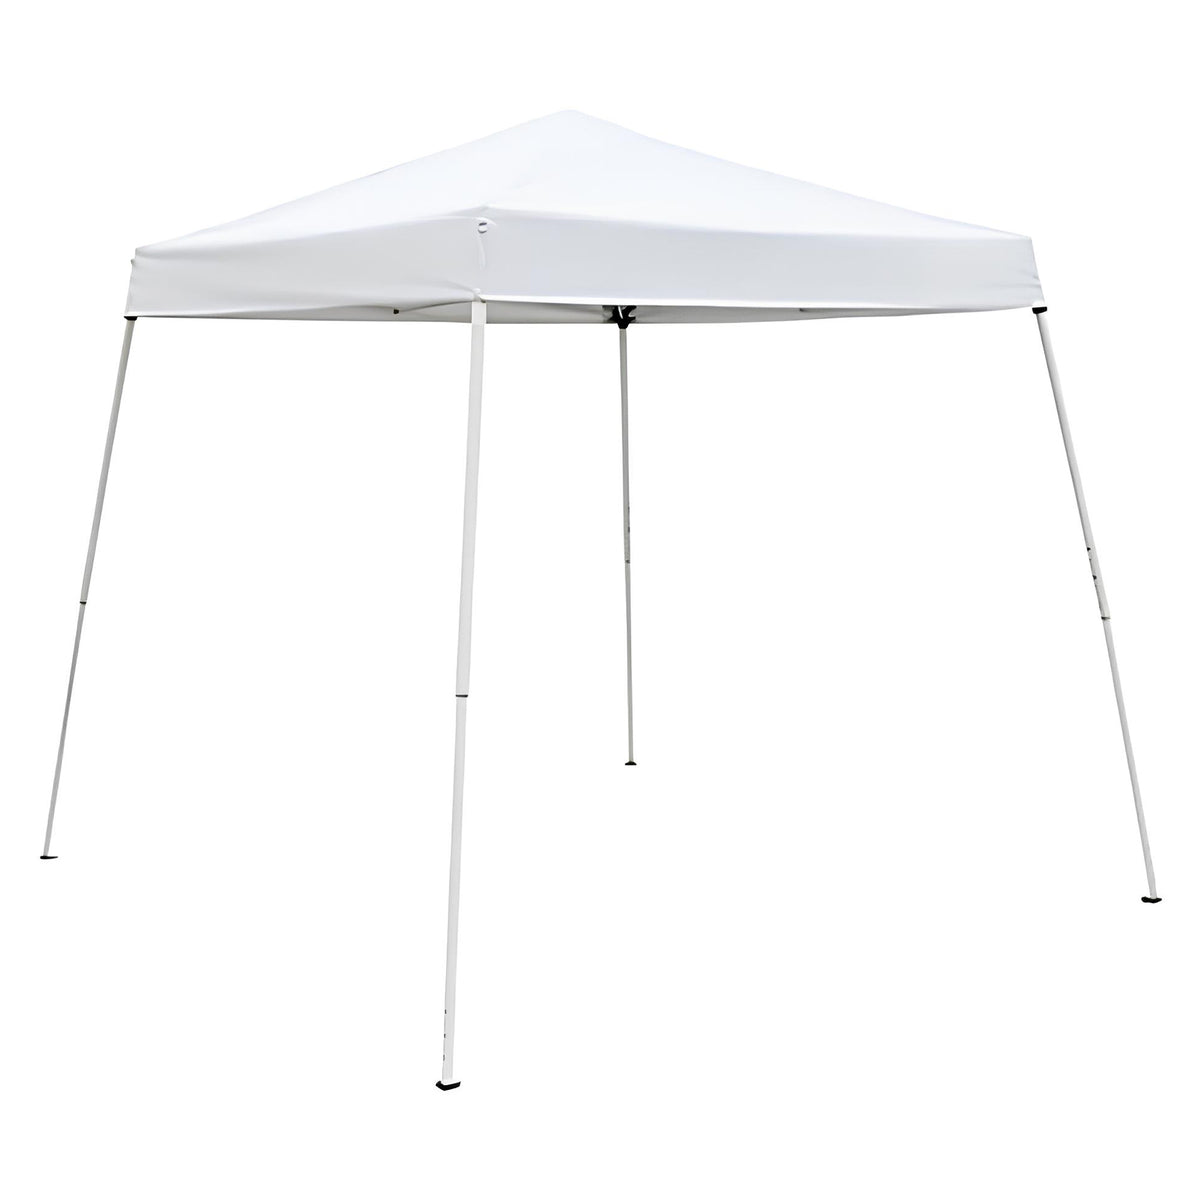 Folding Tent - White Color